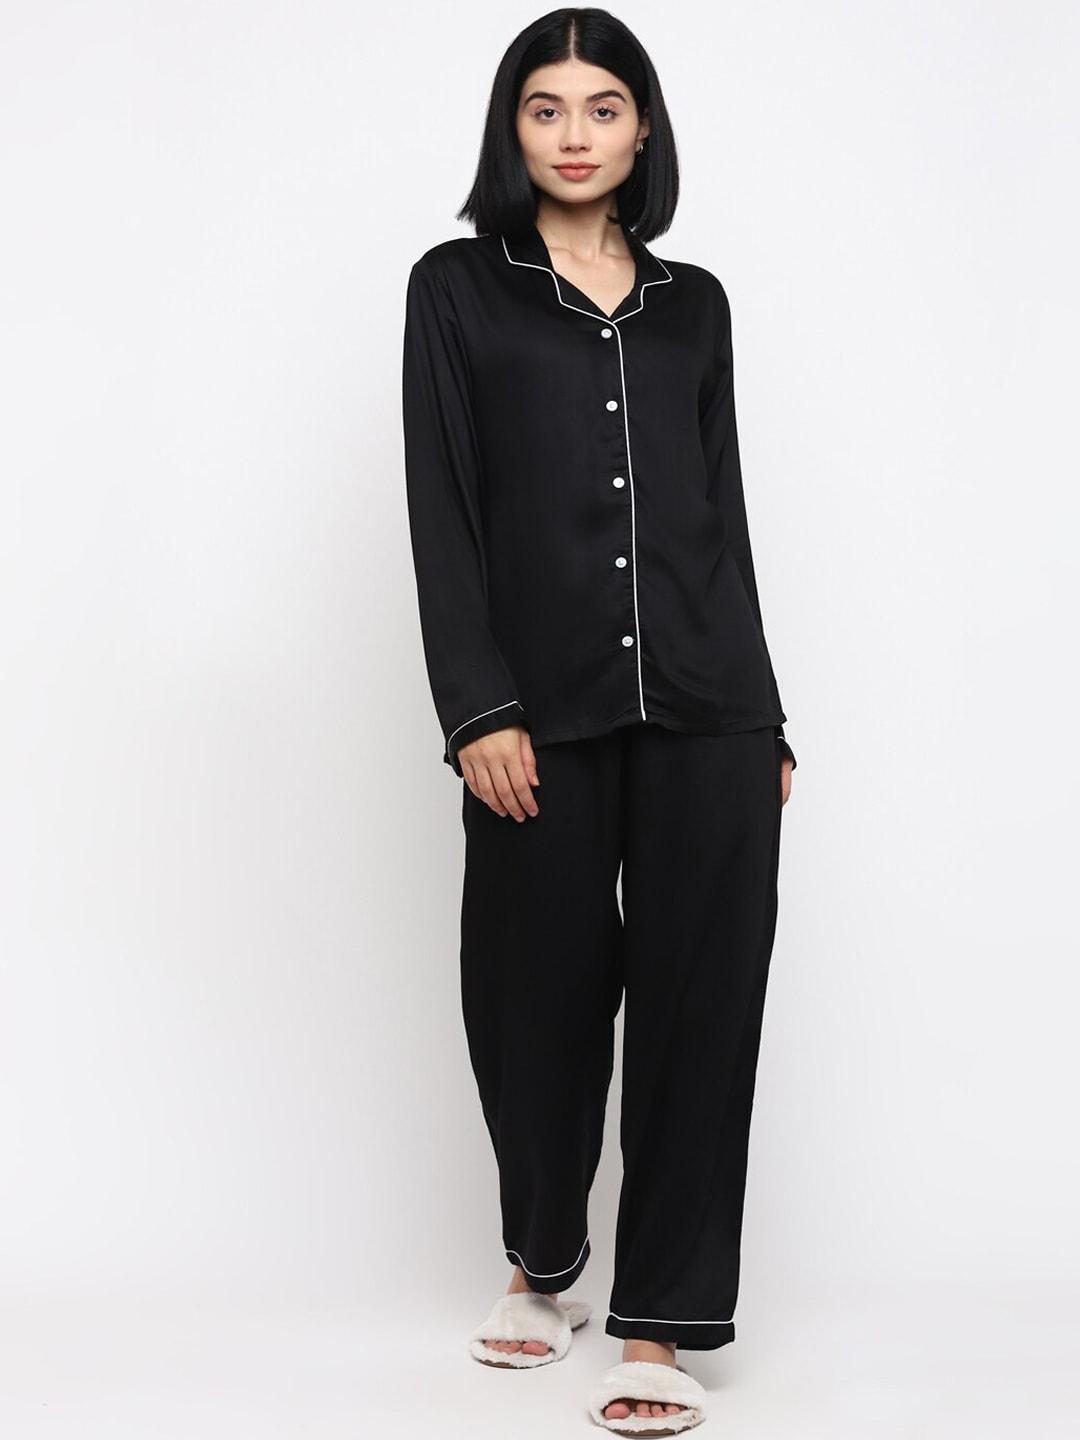 shopbloom-women-black-solid-night-suit